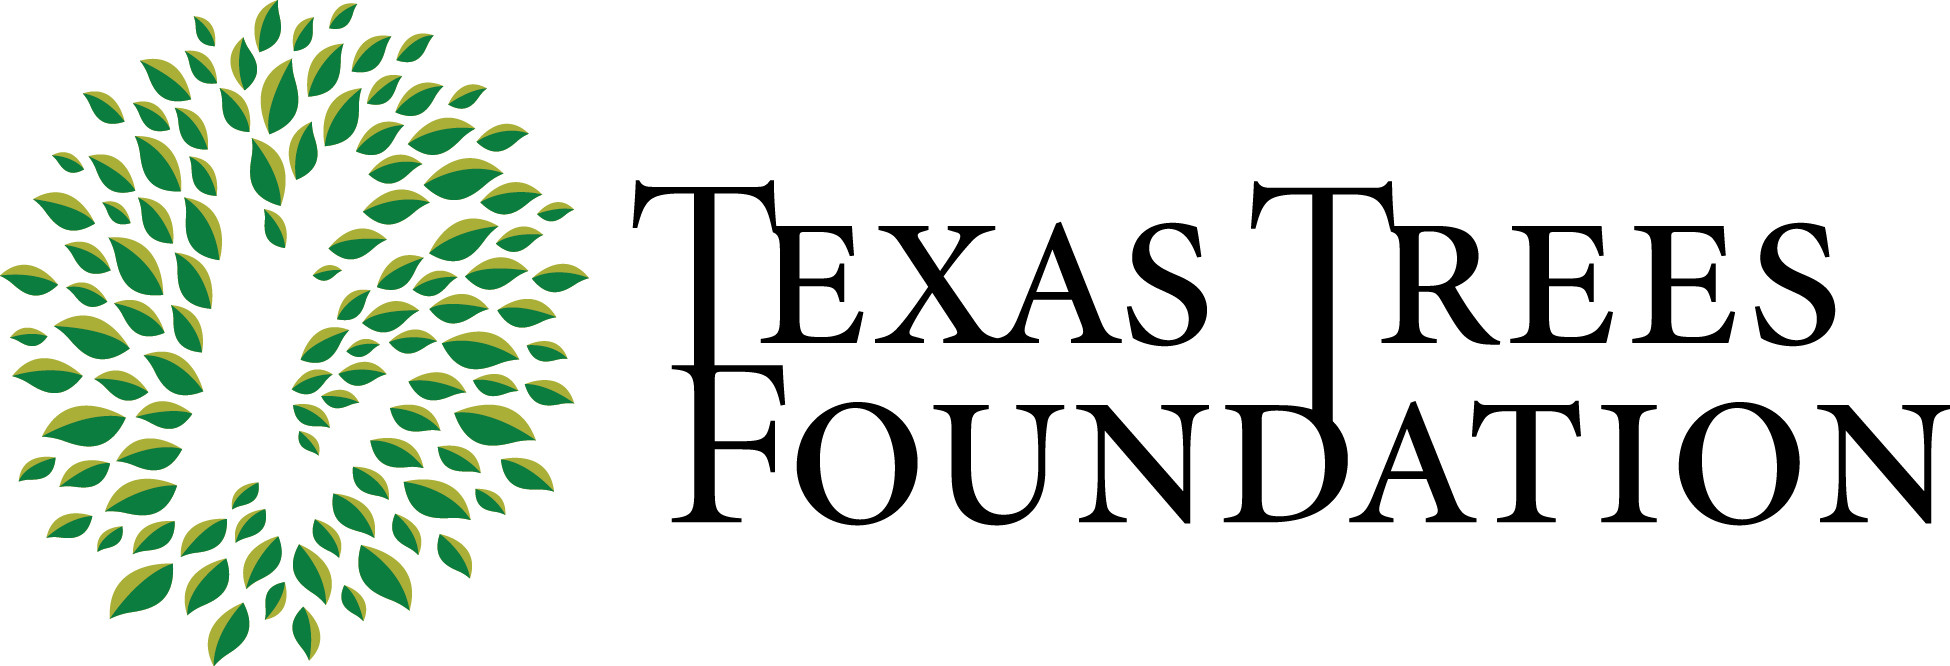 Texas Trees Foundation Logo